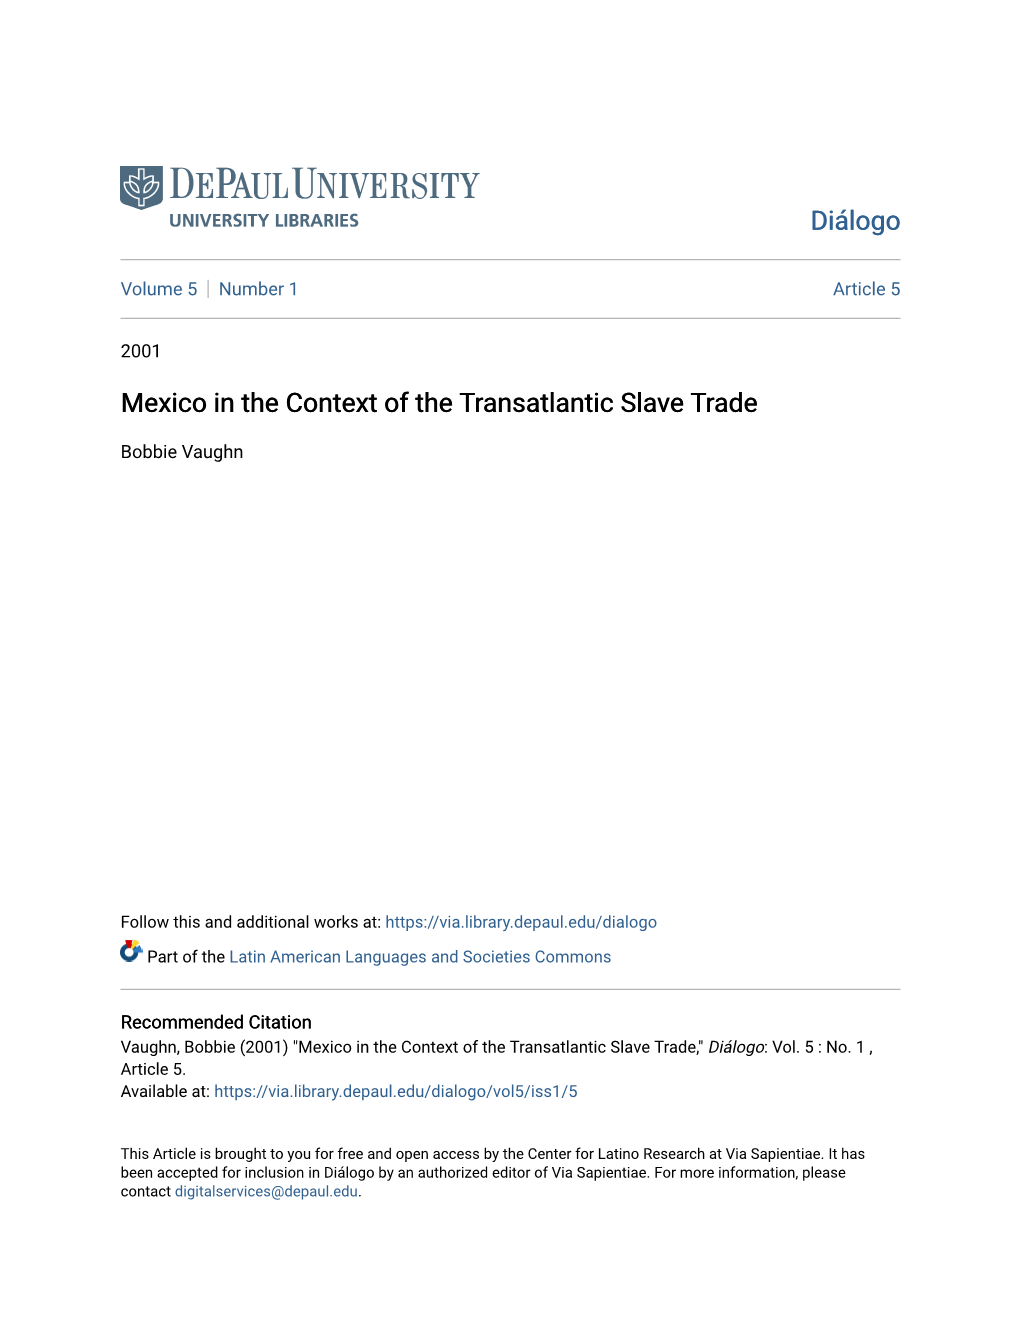 Mexico in the Context of the Transatlantic Slave Trade